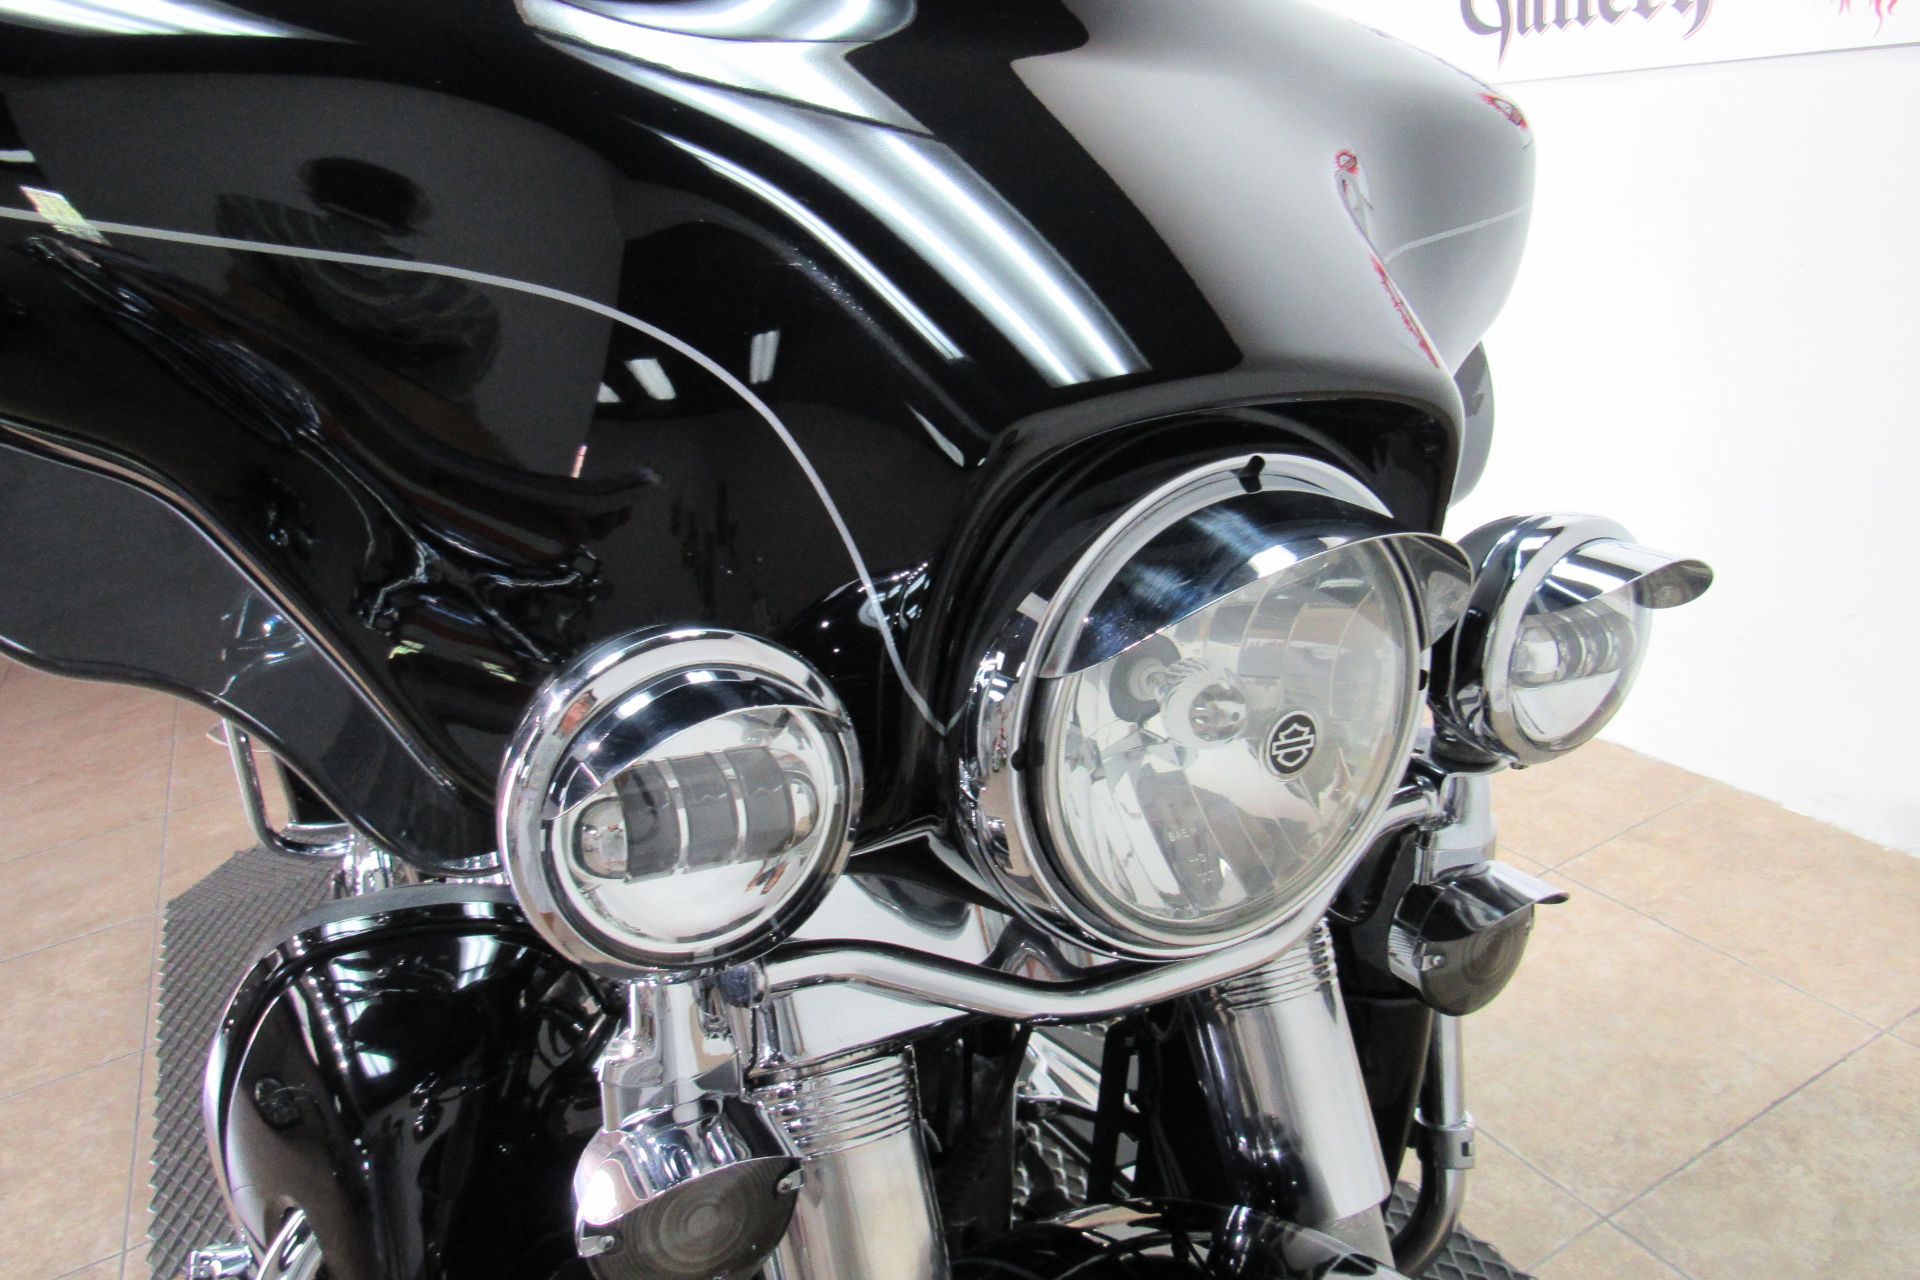 2012 Harley-Davidson Electra Glide® Ultra Limited in Temecula, California - Photo 6